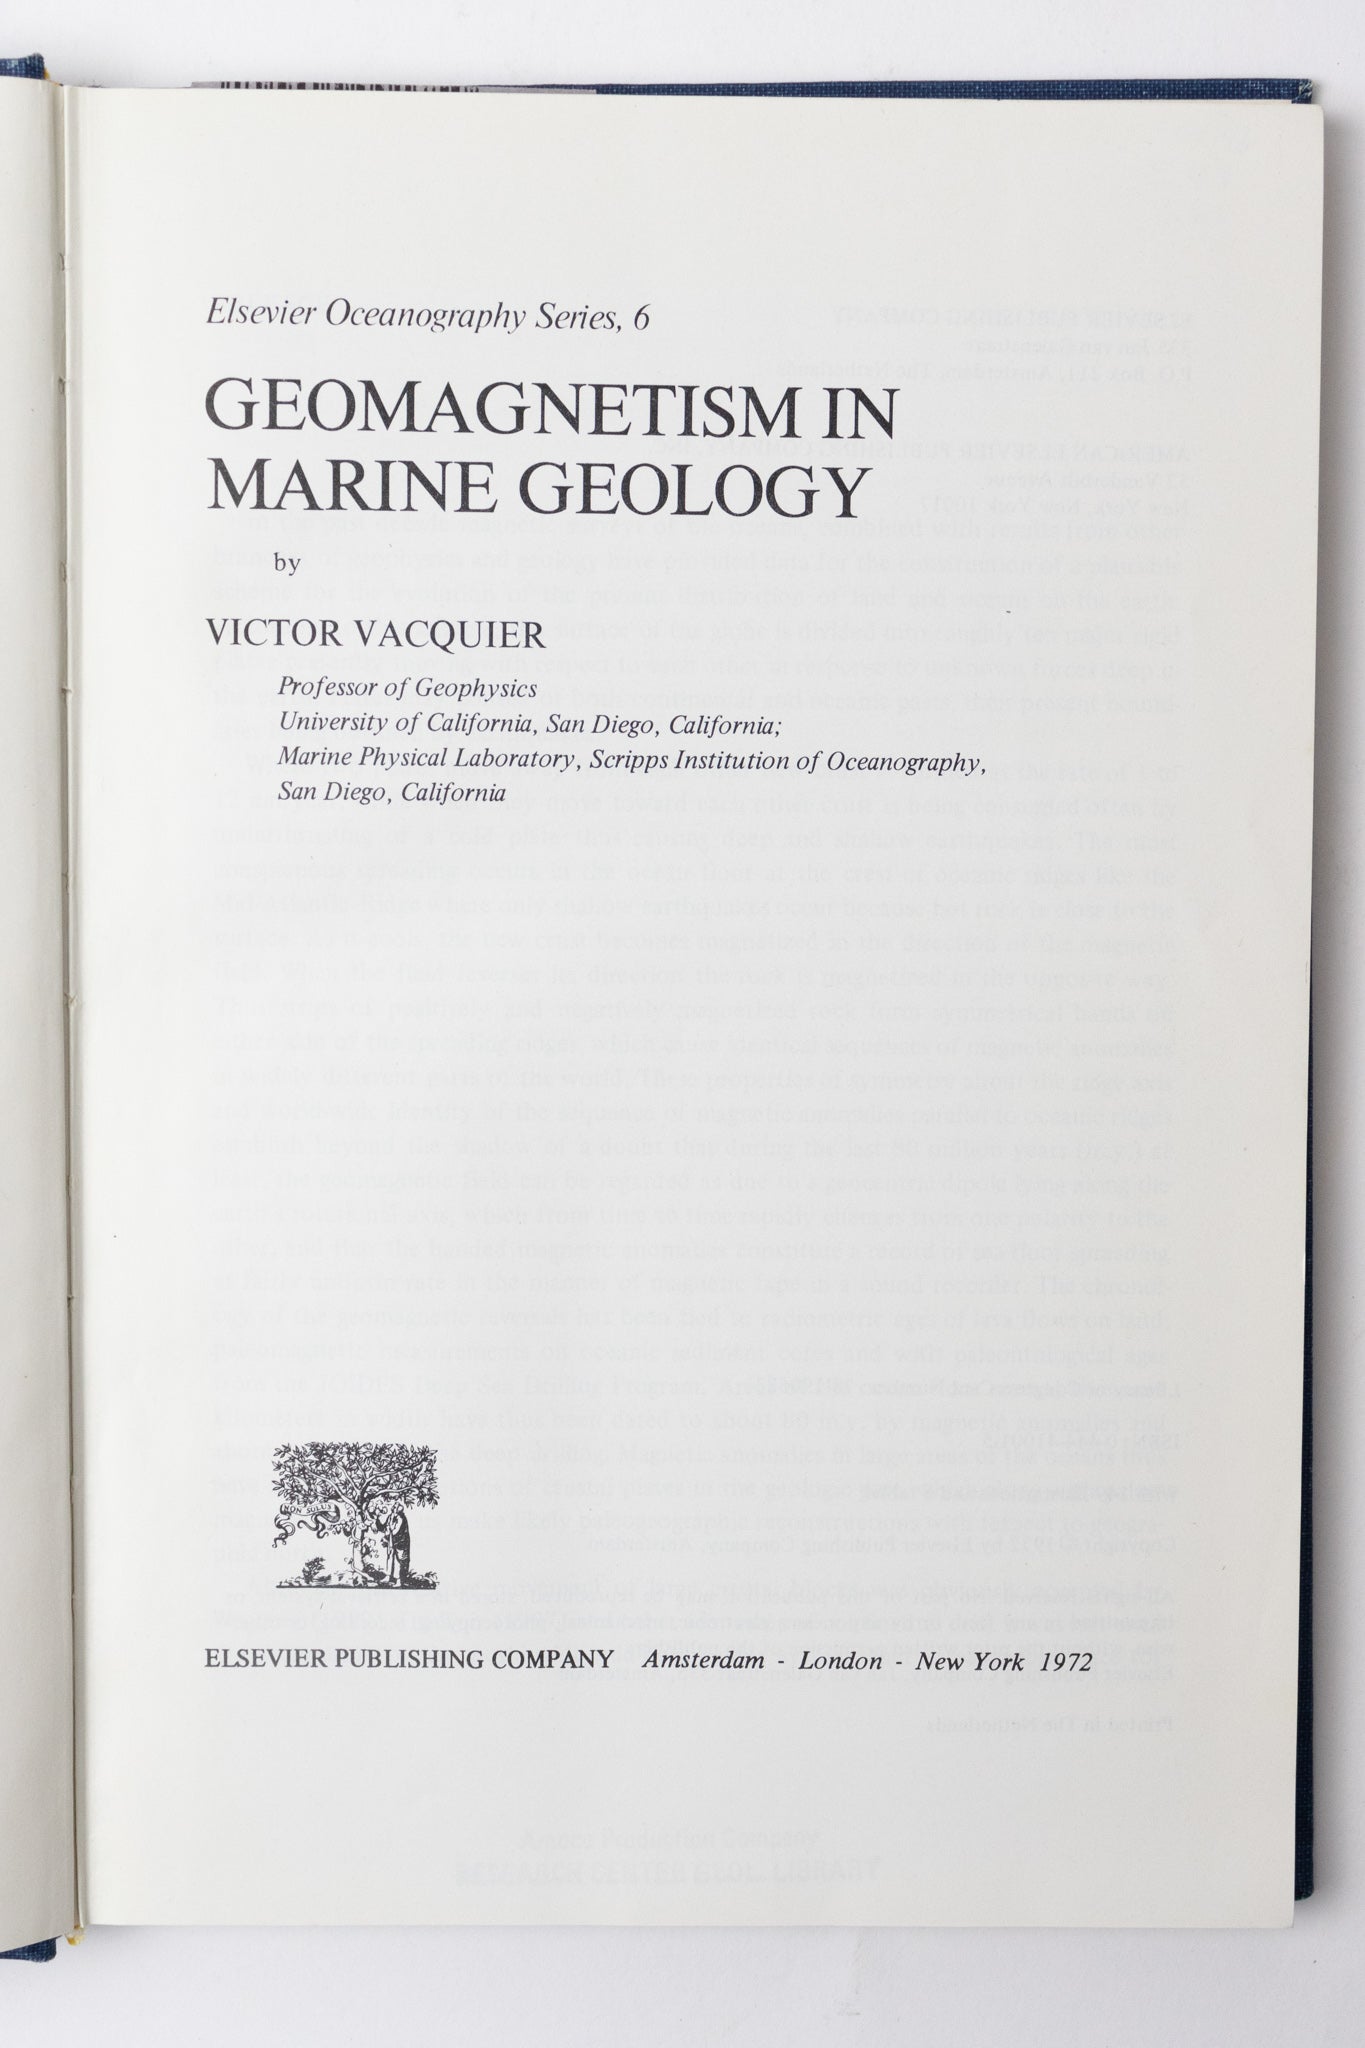 Geomagnetism in Marine Geology: Elsevier Oceanography Series Vol. 6 - Stemcell Science Shop